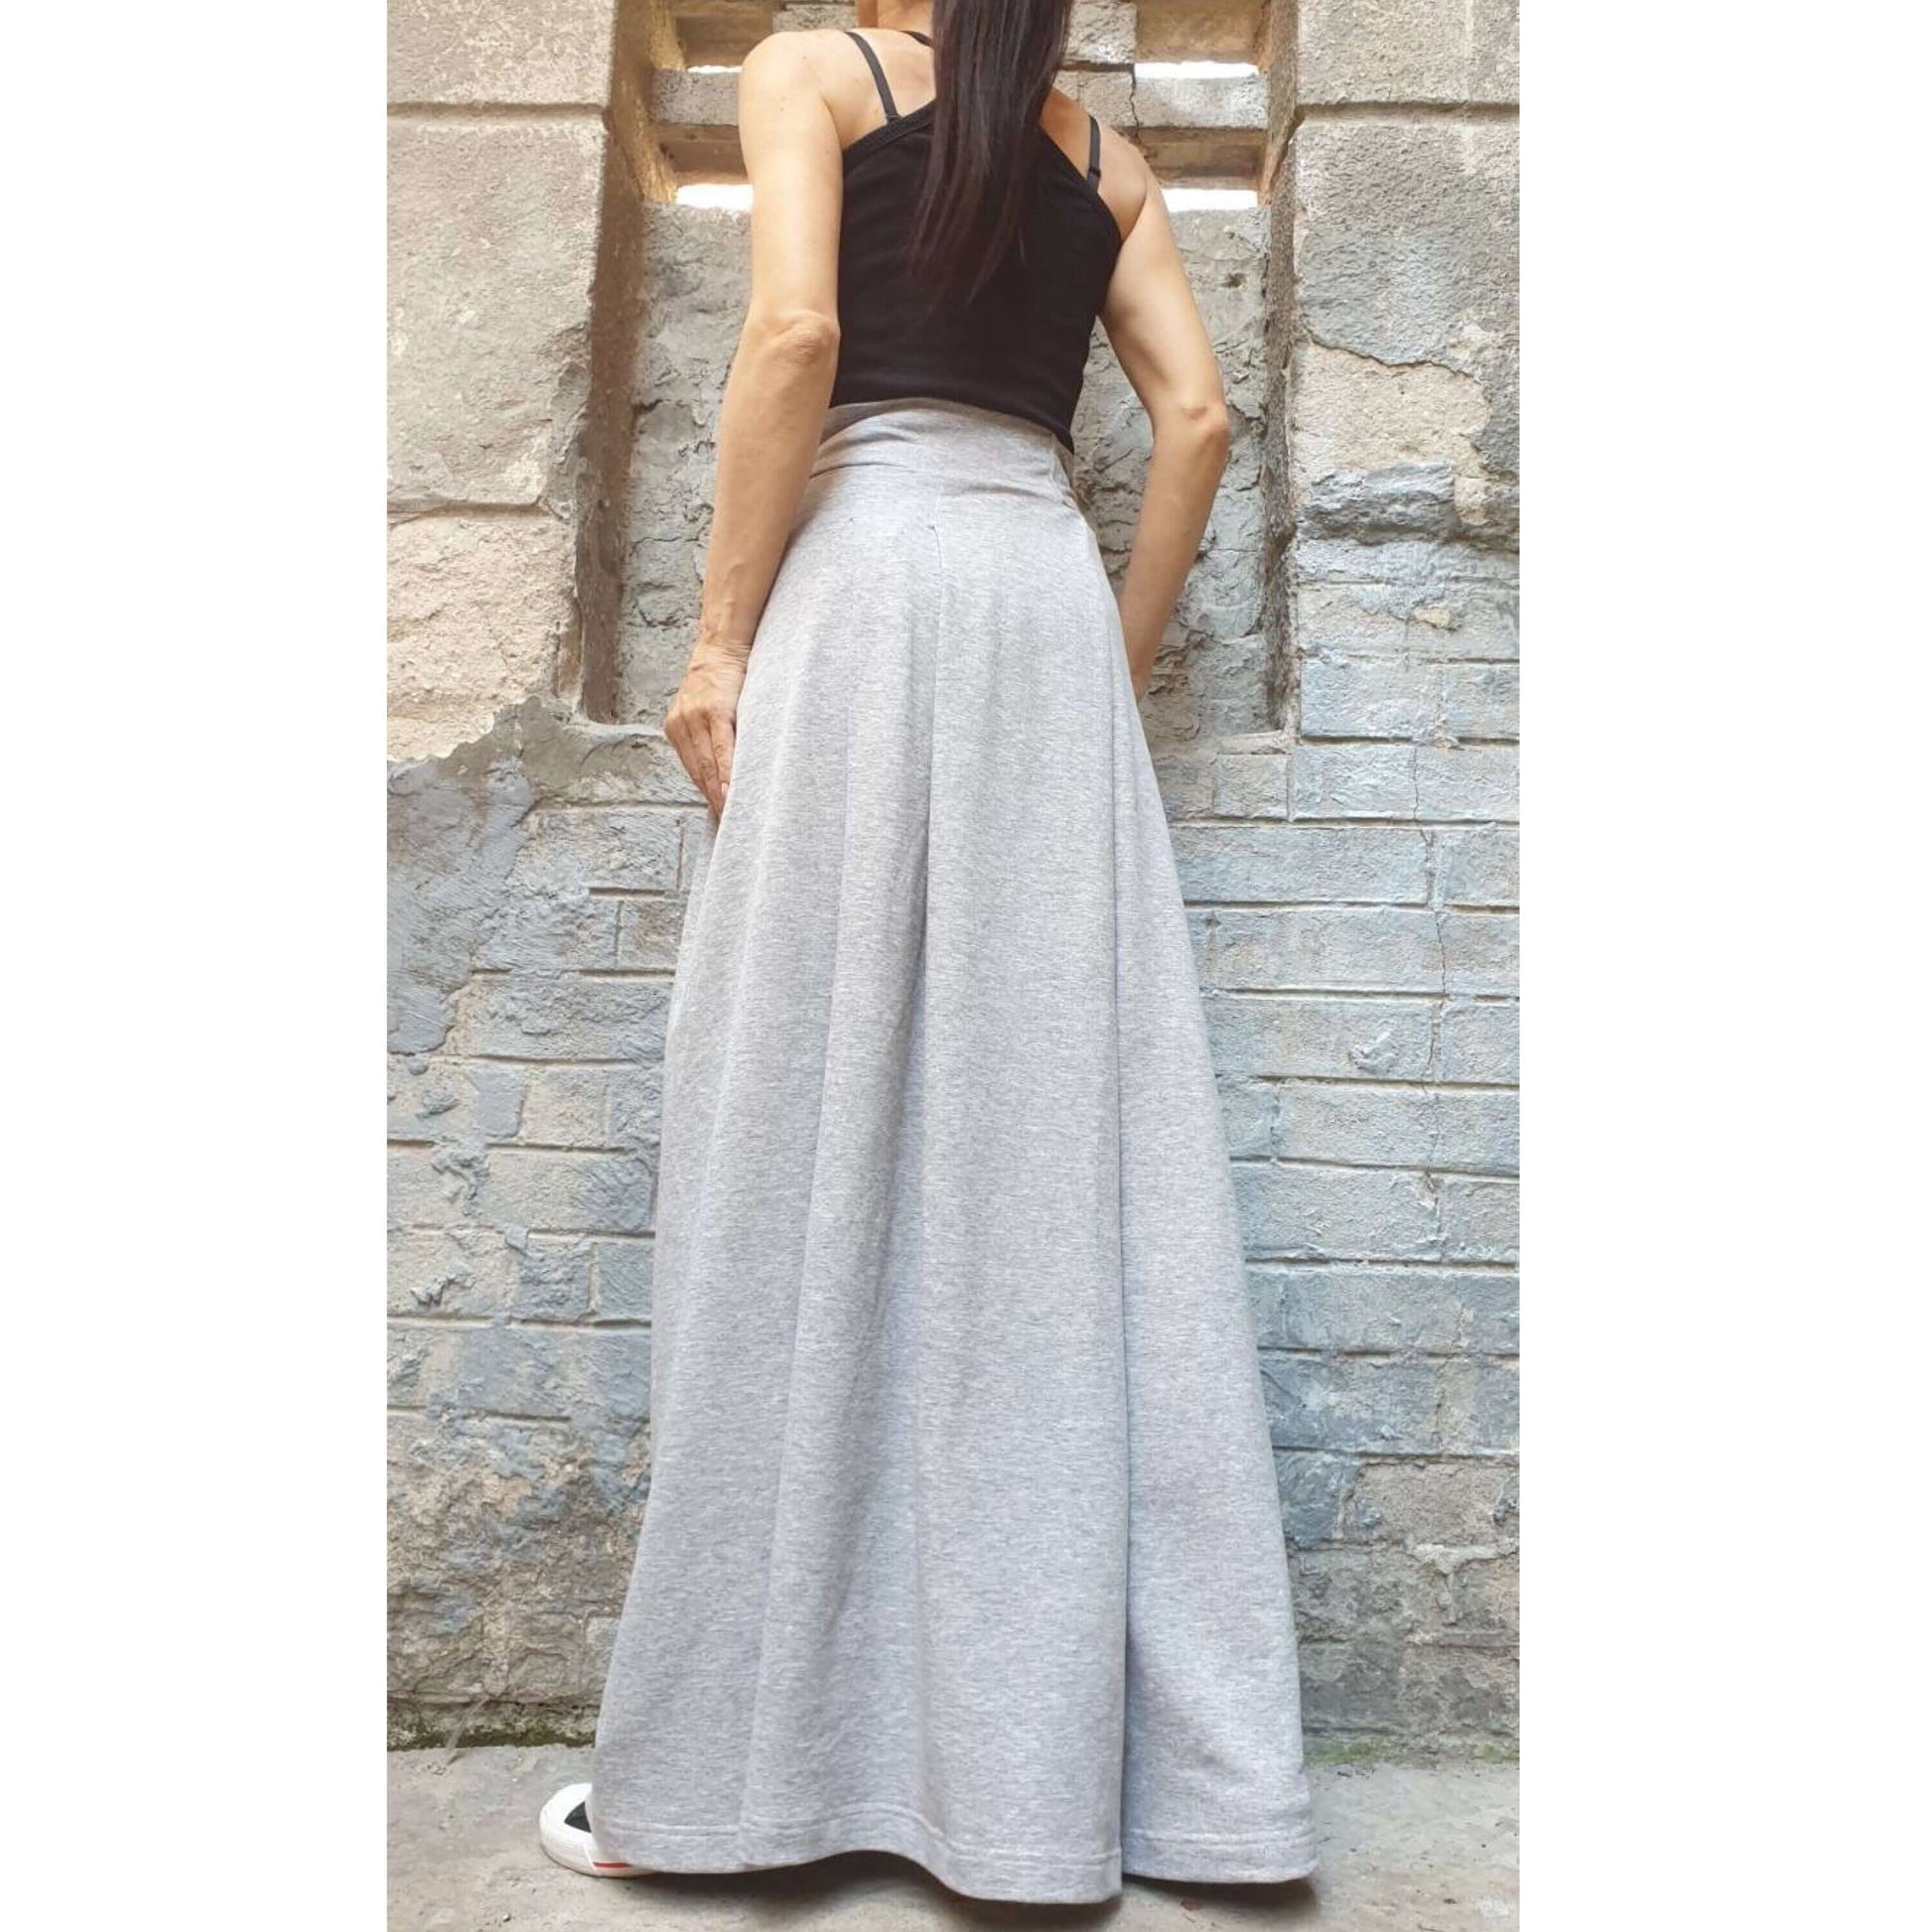 Loose Long Grey Pants - Handmade clothing from AngelBySilvia - Top Designer Brands 